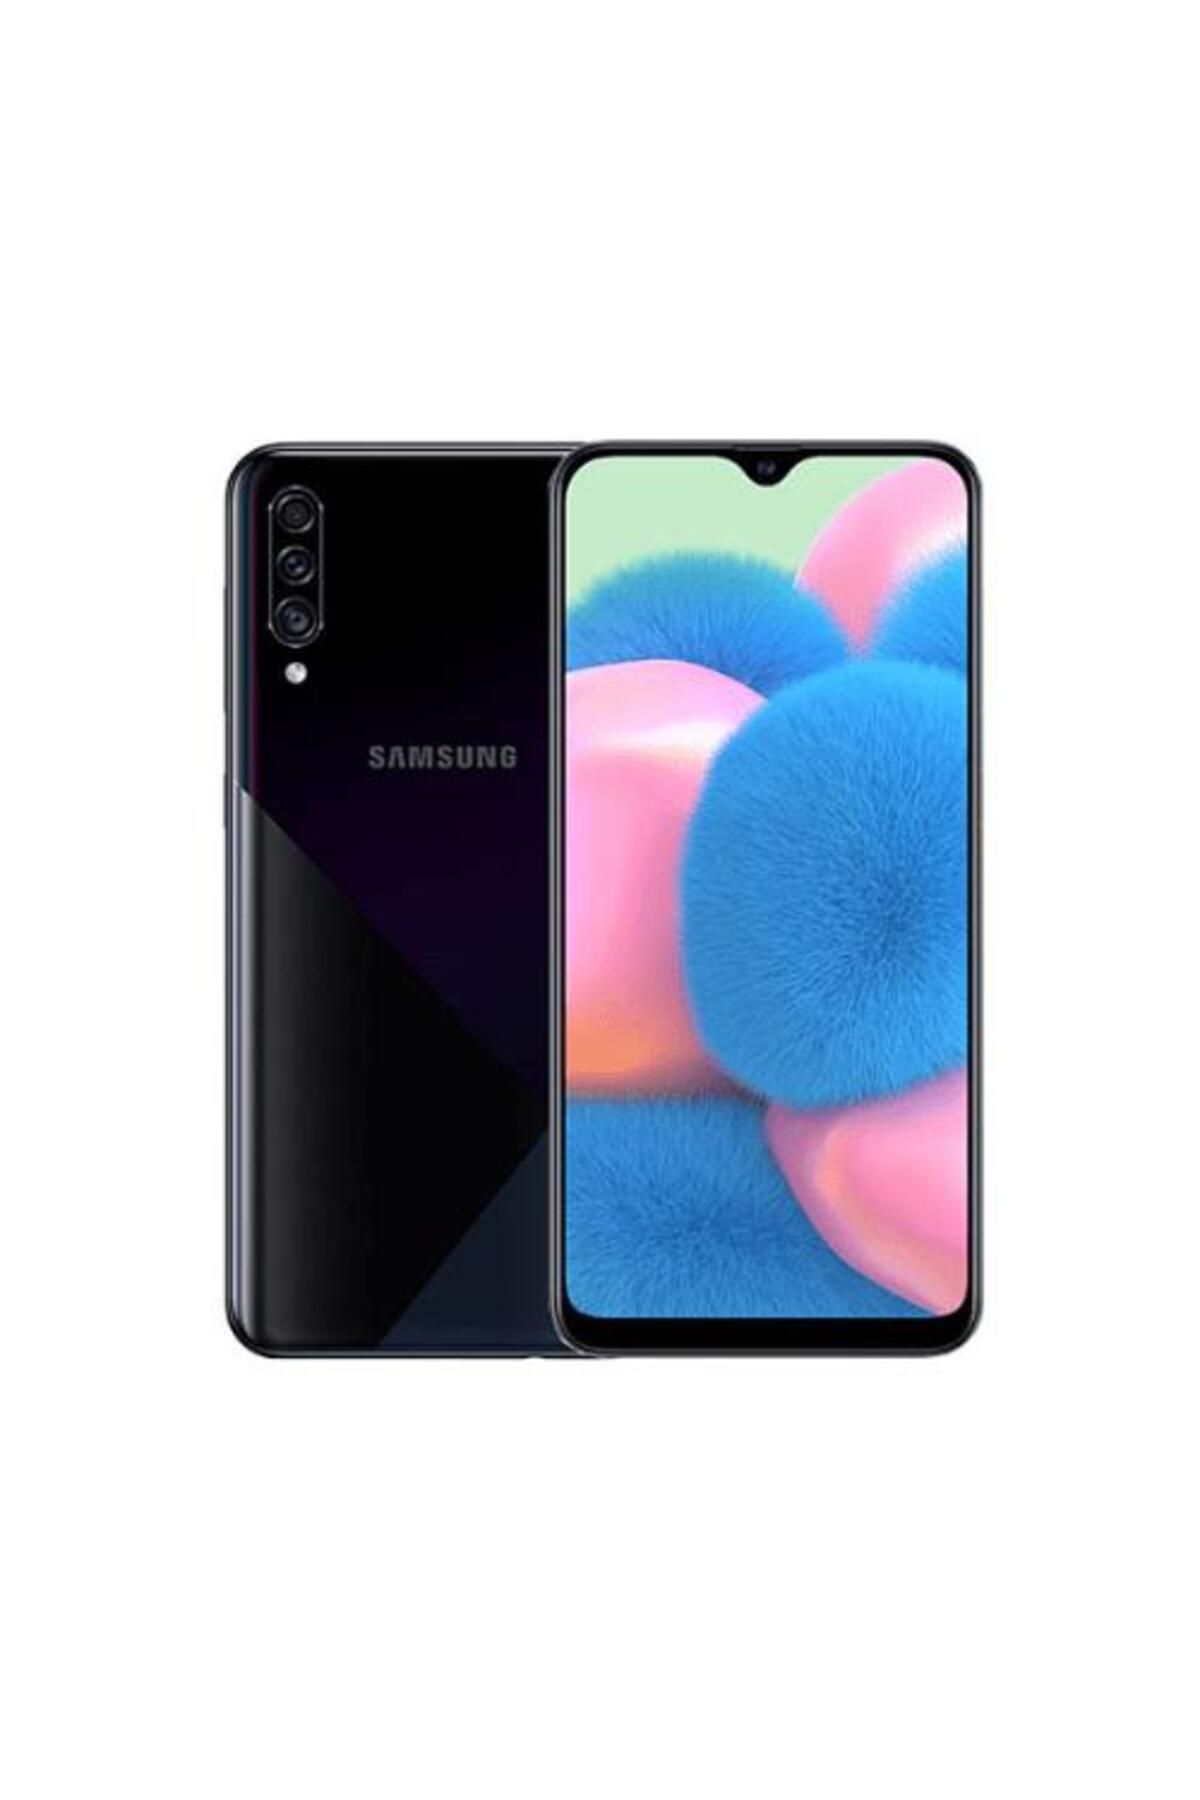 Samsung Yenilenmiş Galaxy A30s 64gb -a Kalite- Siyah